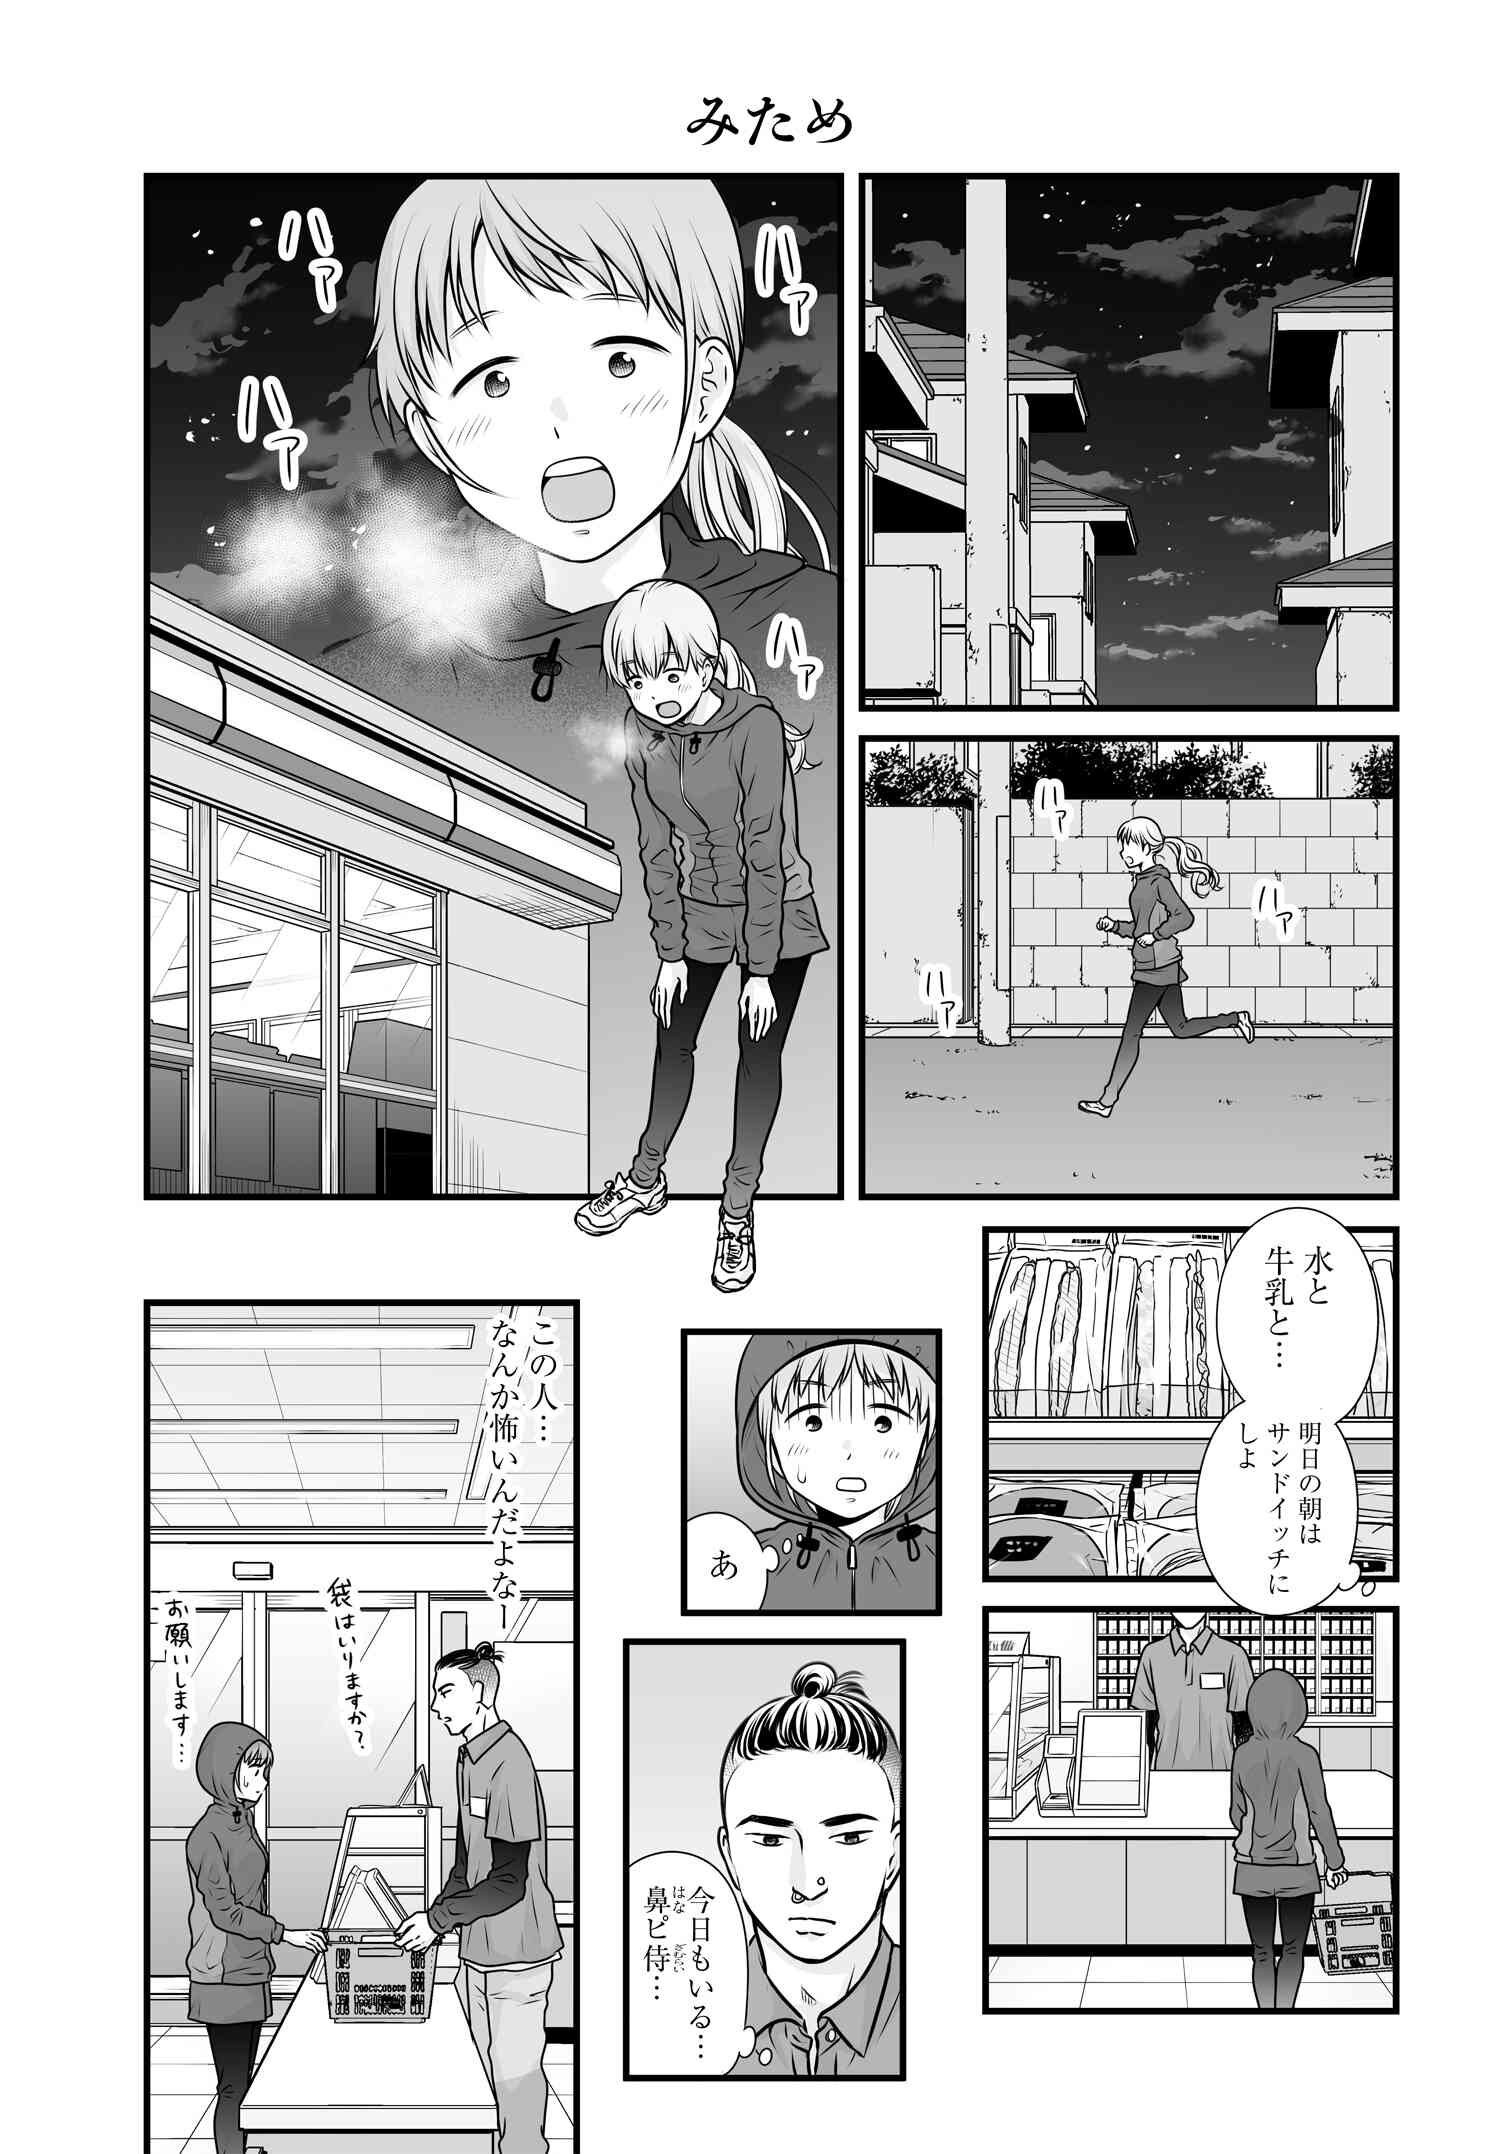 Joshikousei no Mudazukai - Chapter 101 - Page 2